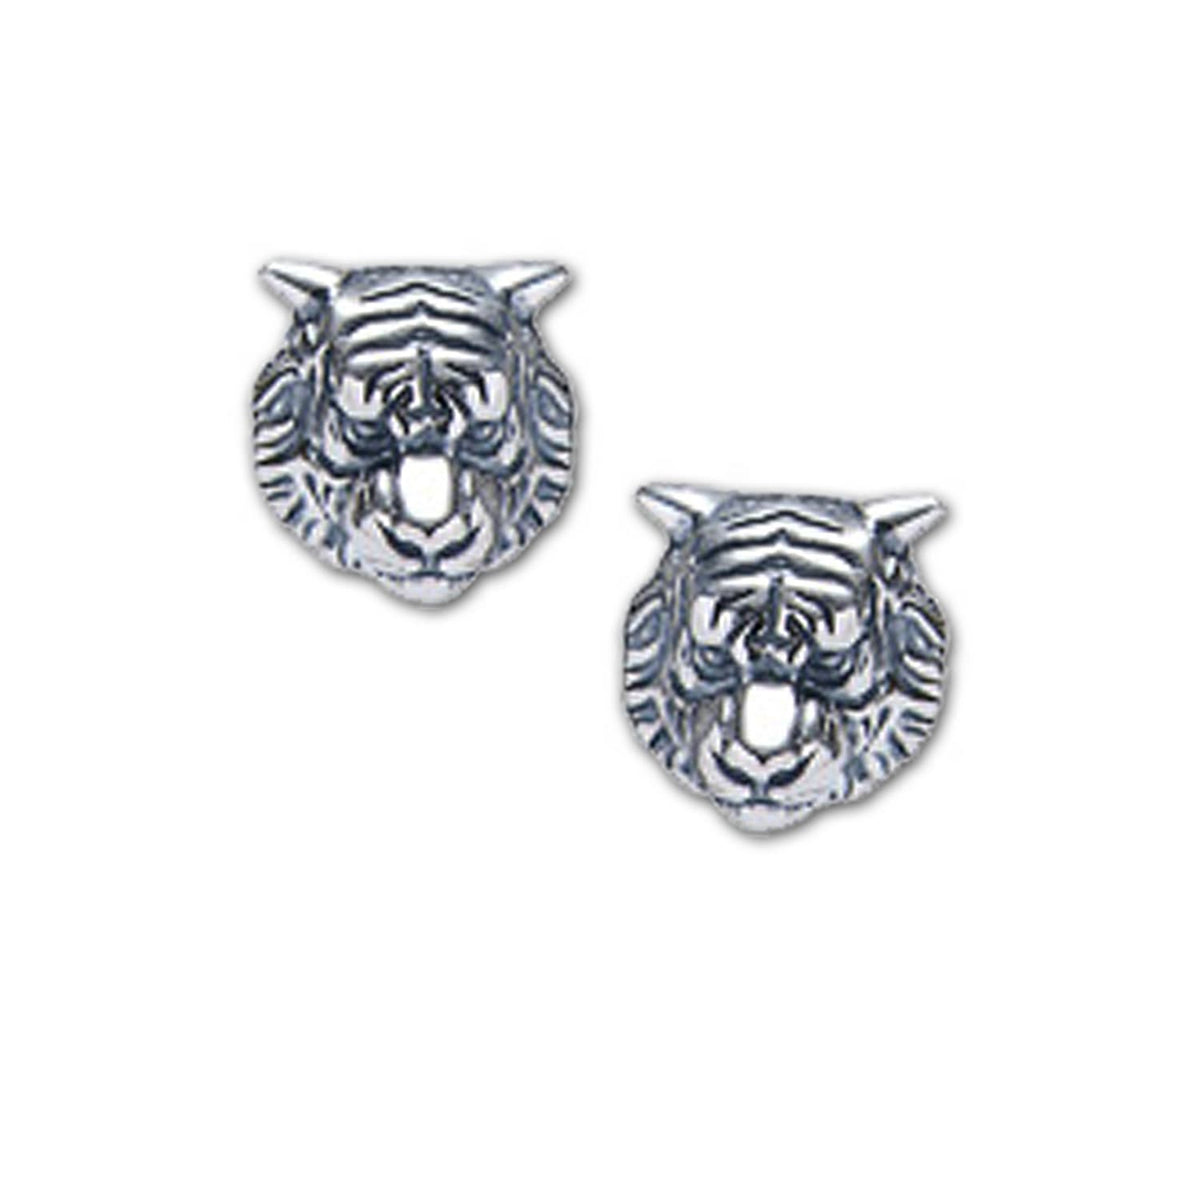 tiger head earrings, silver tiger studs